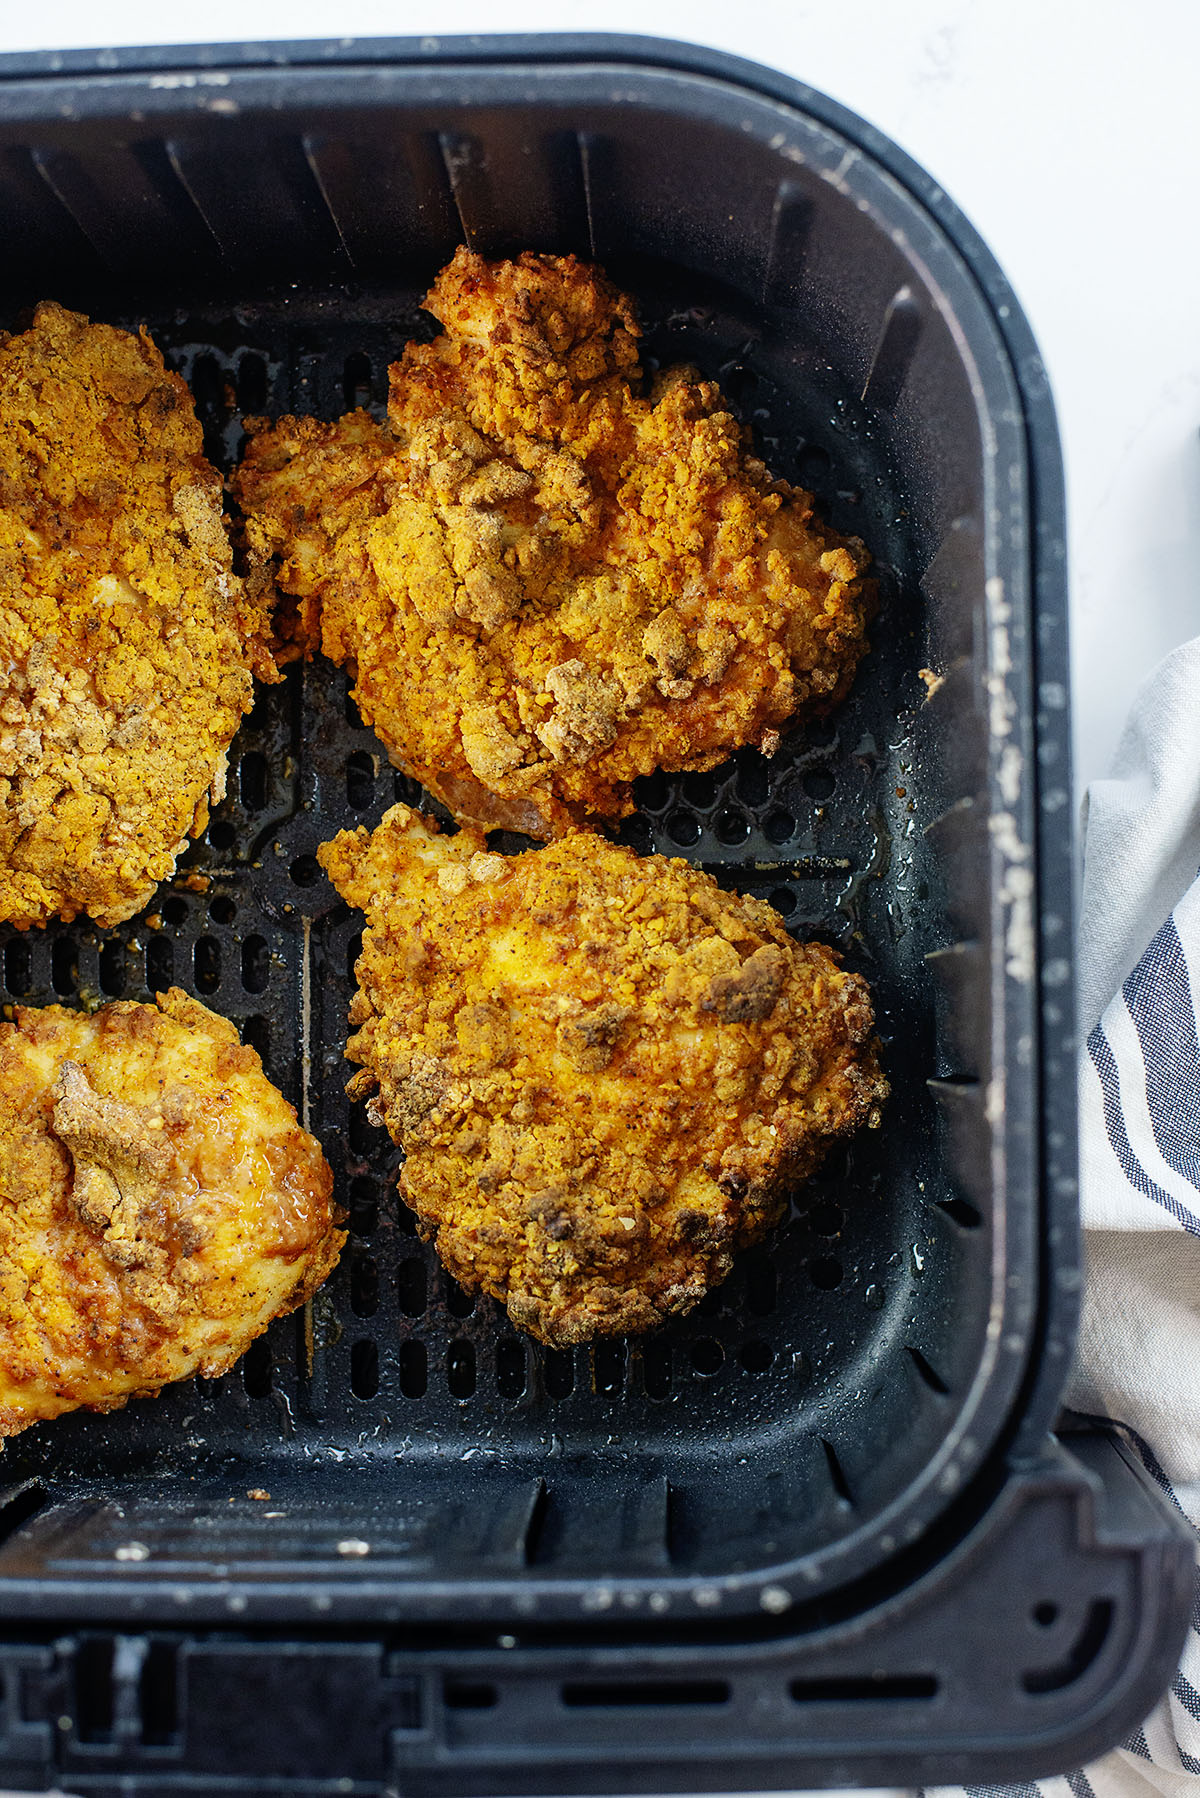 Four chicken breasts in an air fryer basket.